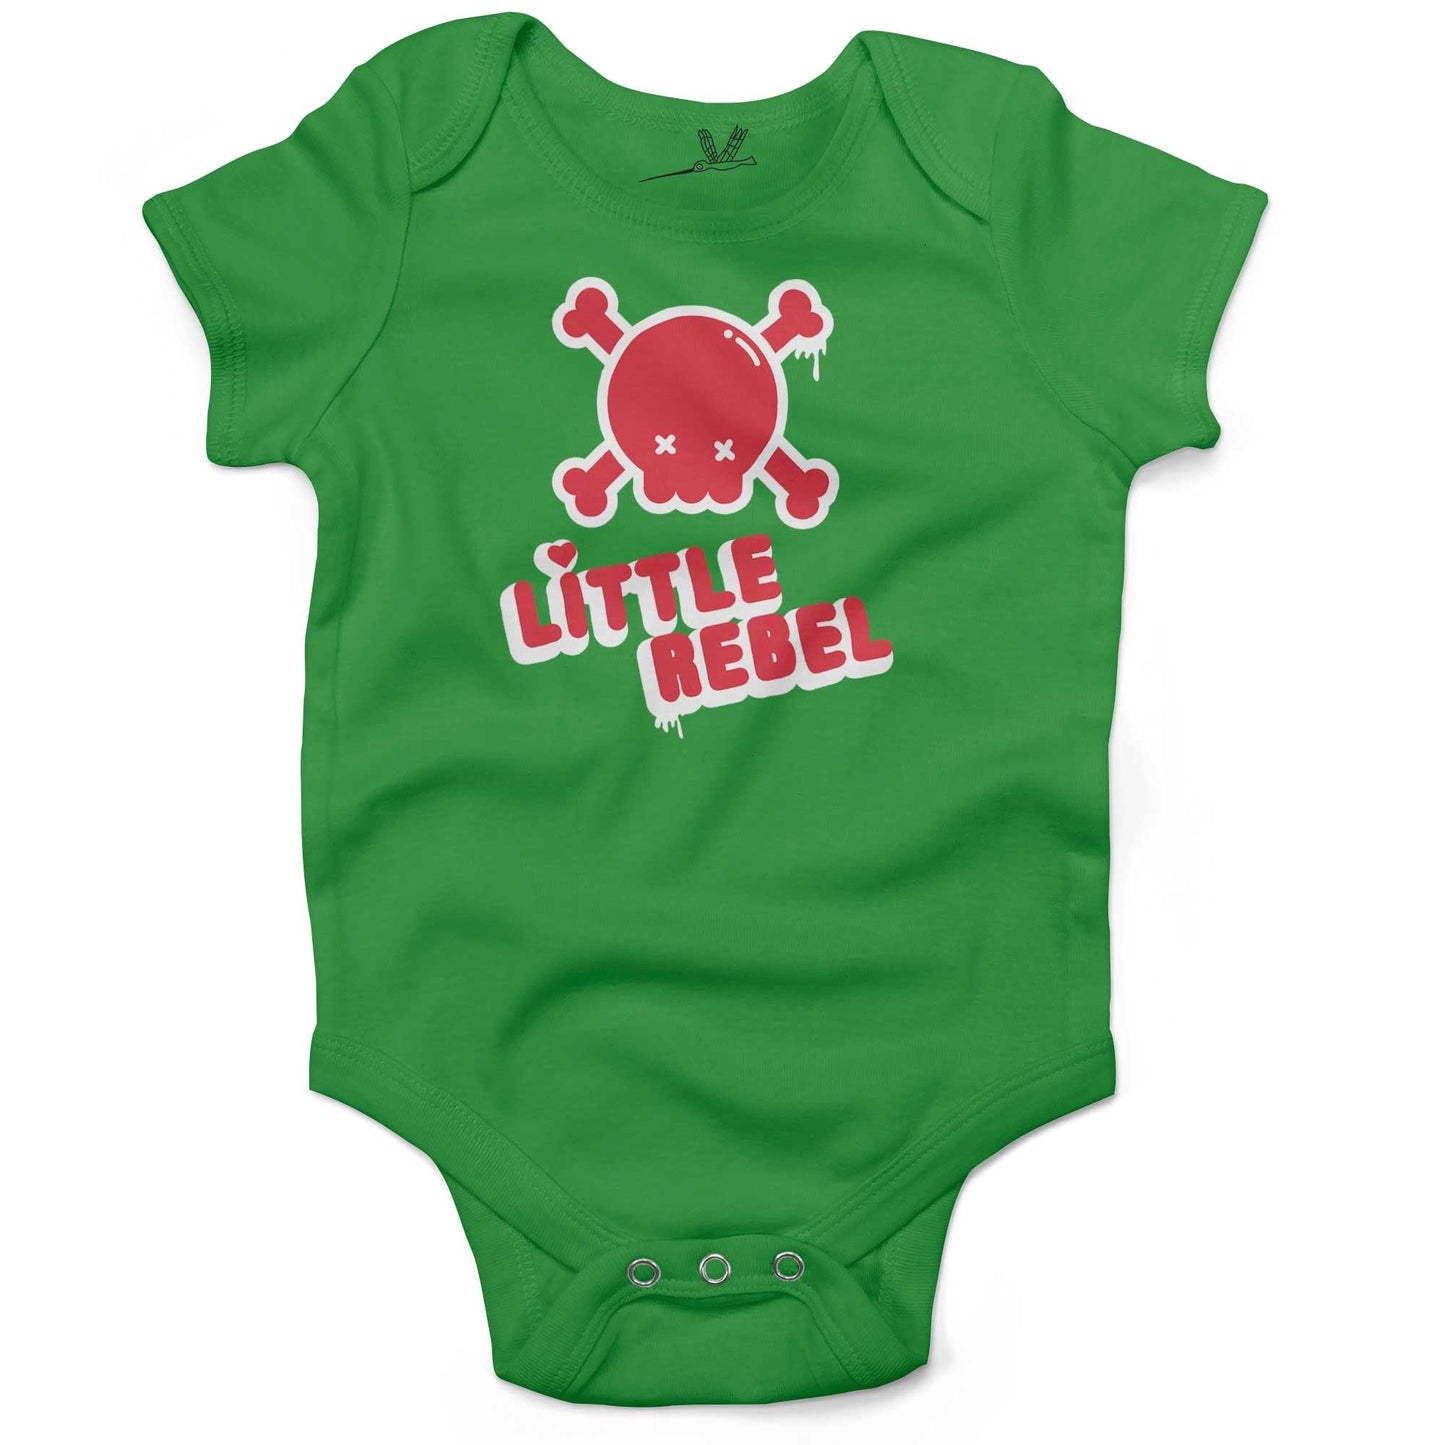 Little Rebel Infant Bodysuit or Raglan Baby Tee-Grass Green-3-6 months